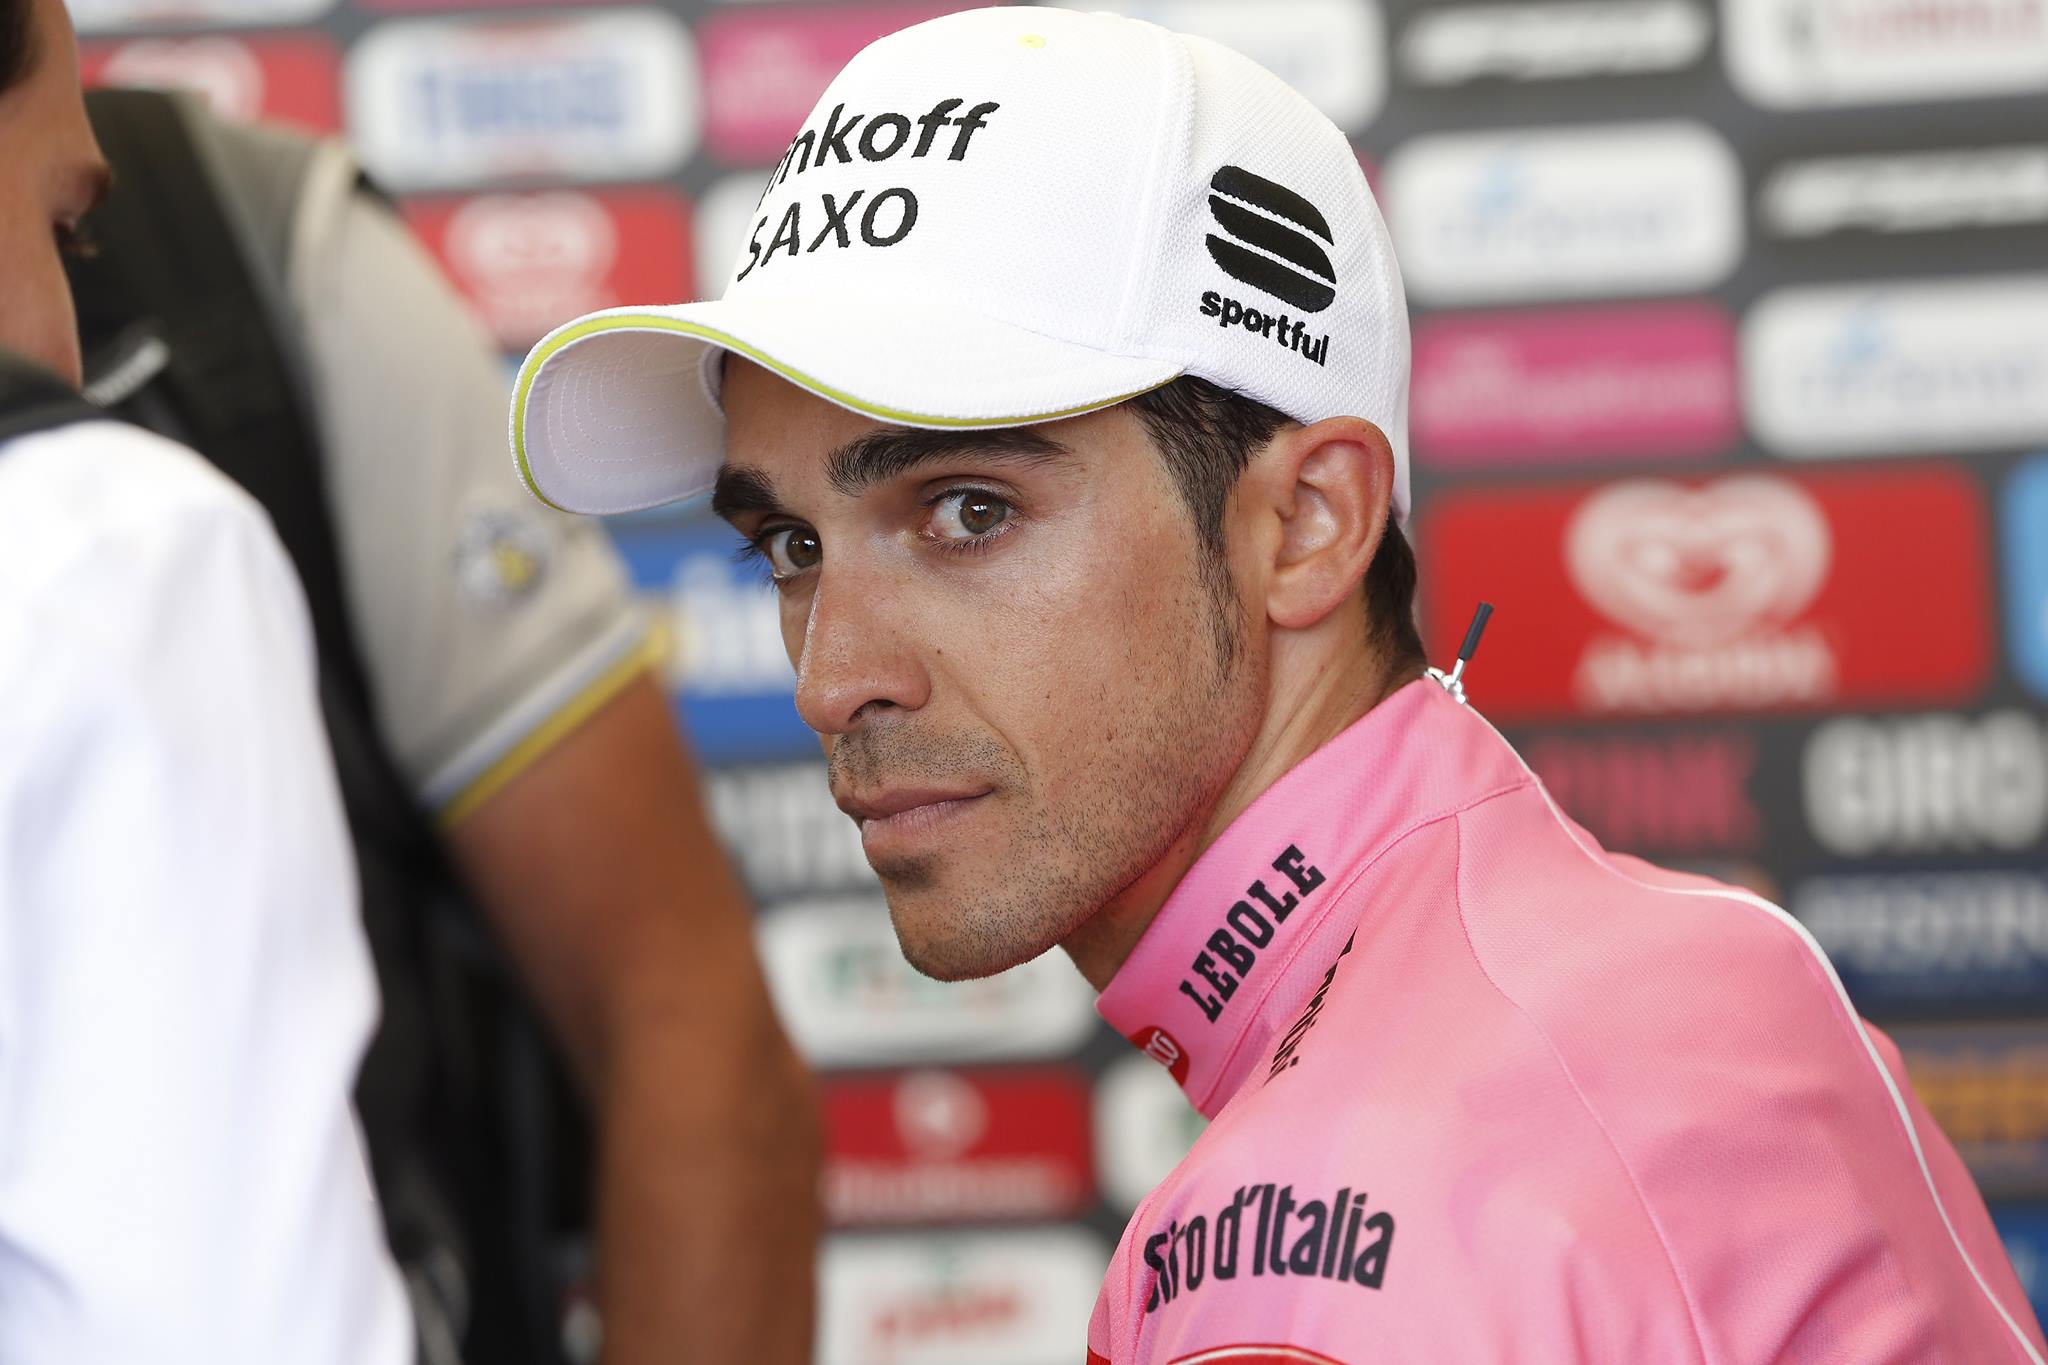 Alberto Contador - Turul Italiei 2015 - umar dislocat